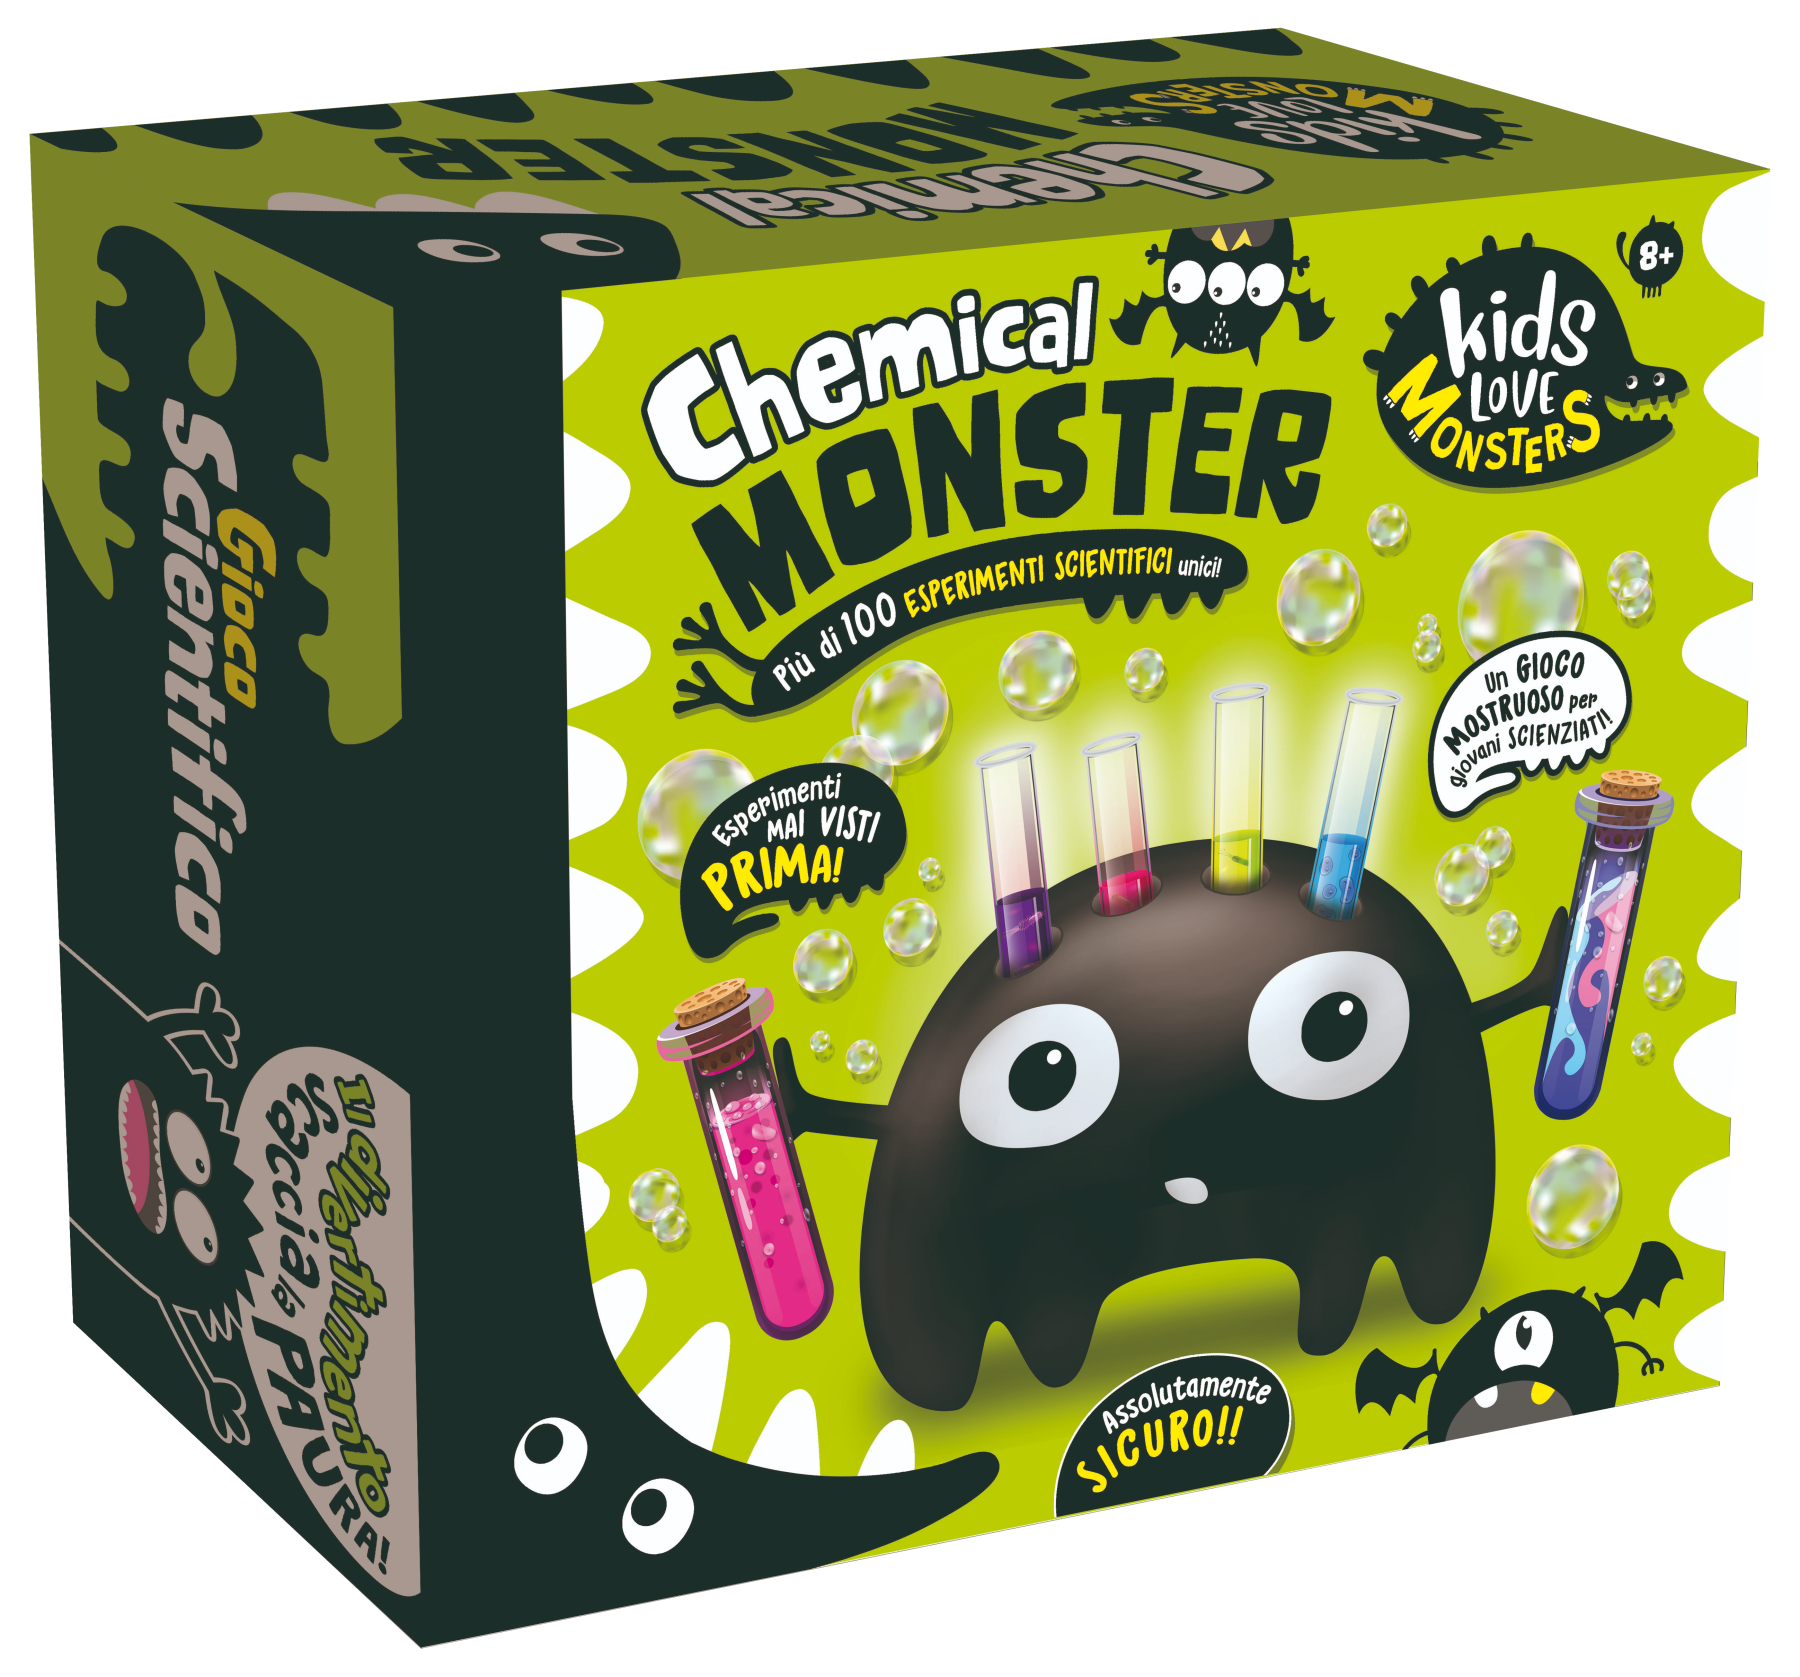 Kids love monsters chemical monsters - LISCIANI